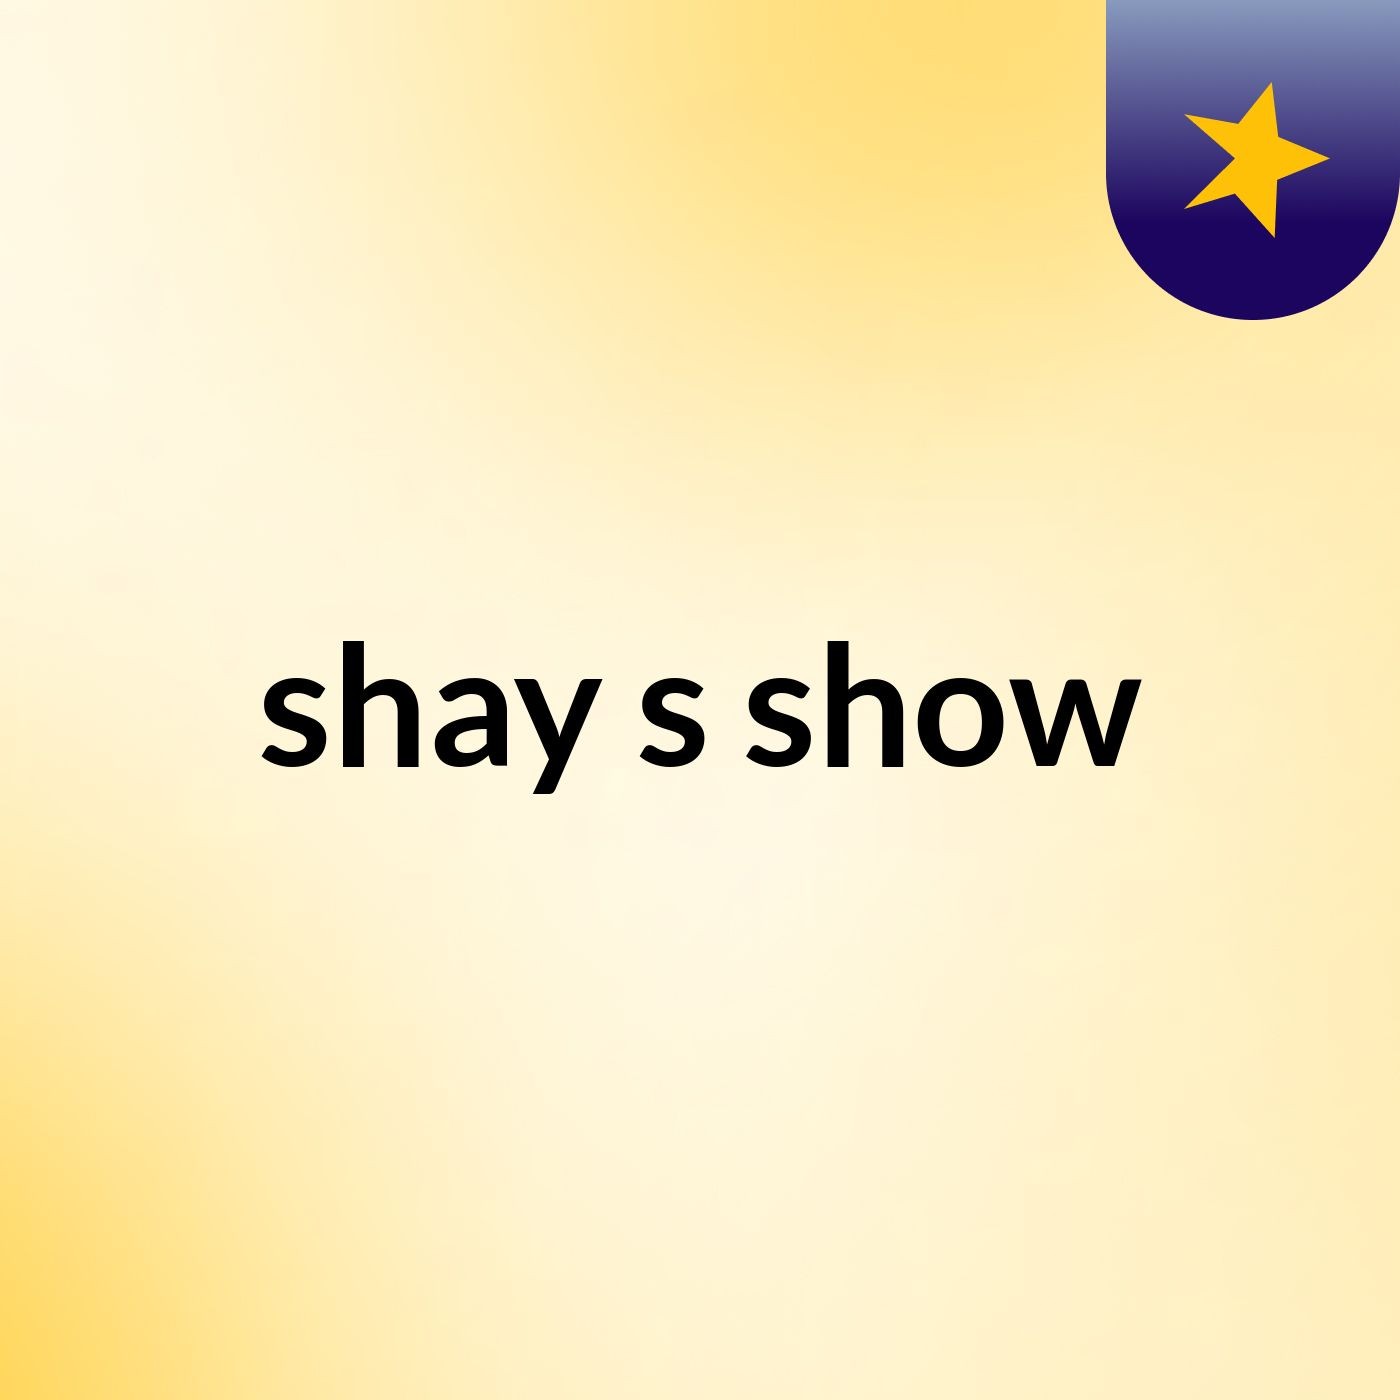 shay's show